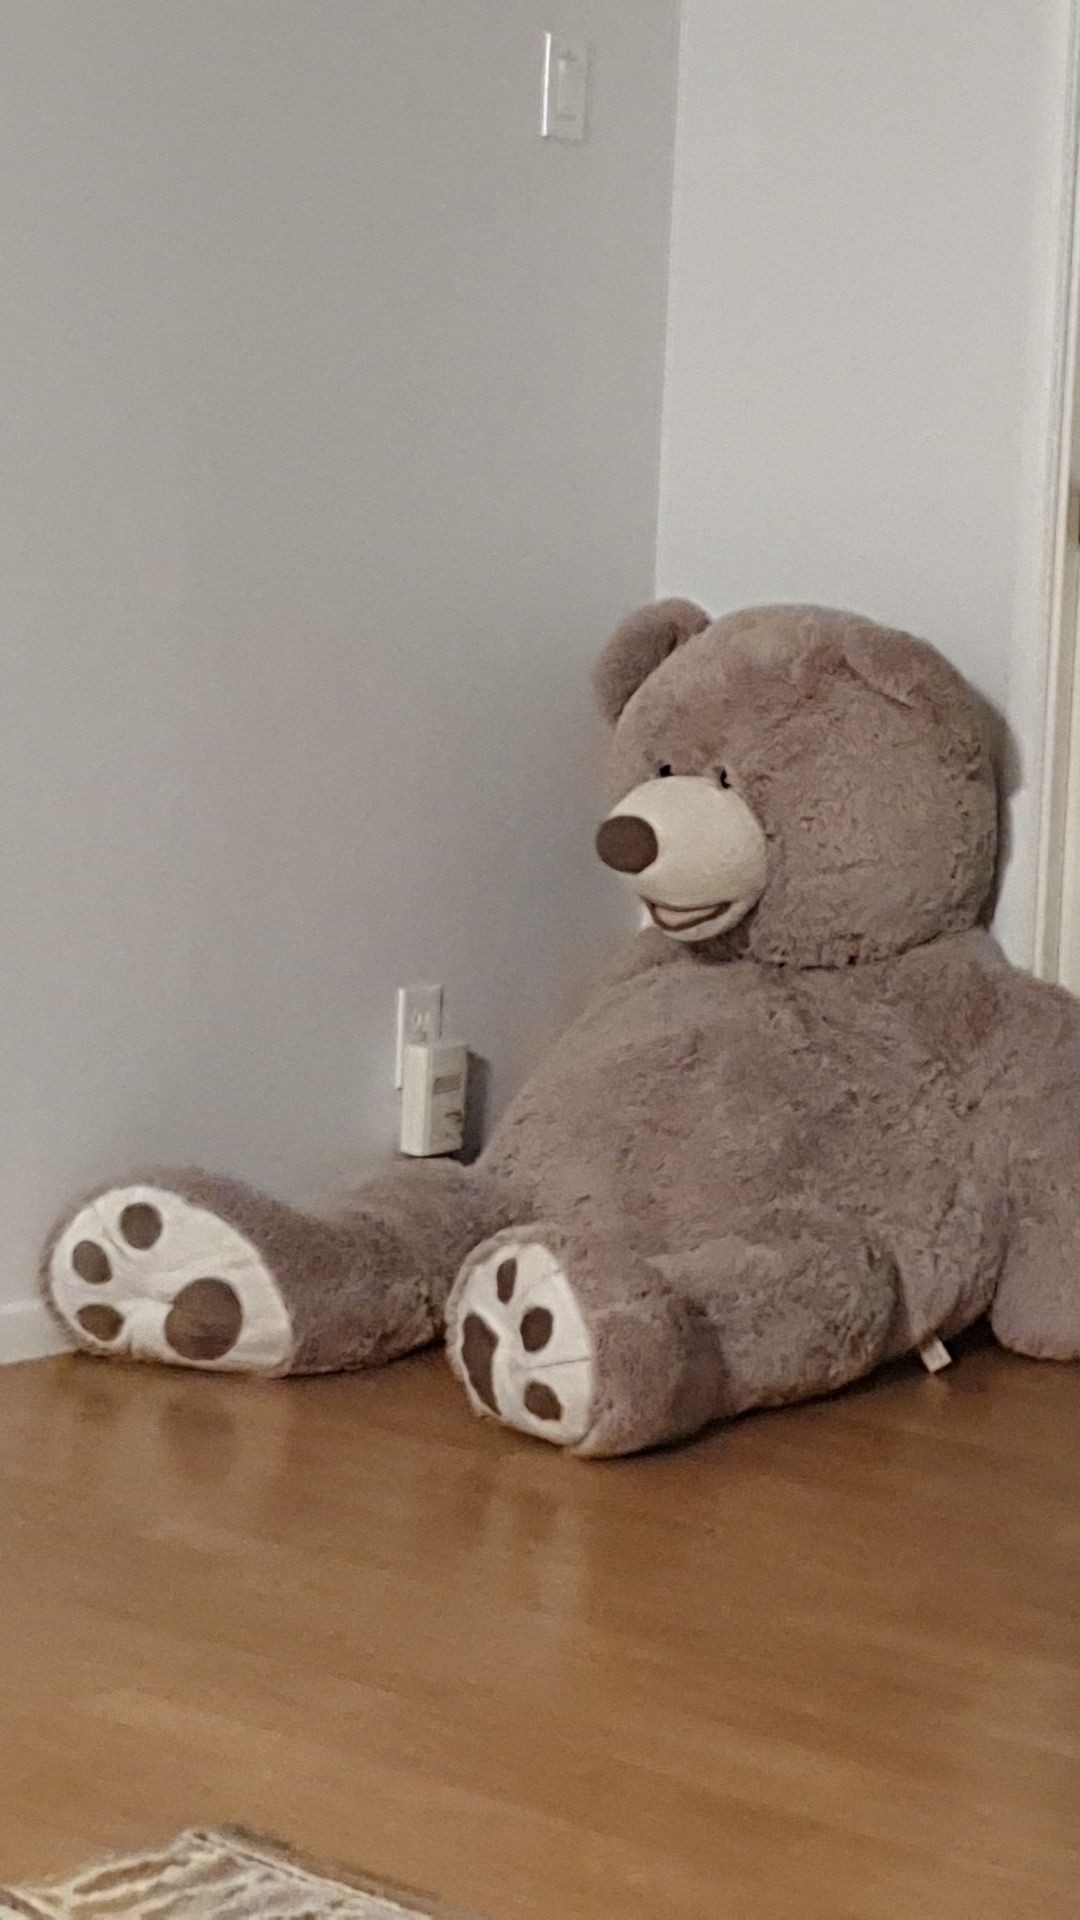 Huge teddy bear